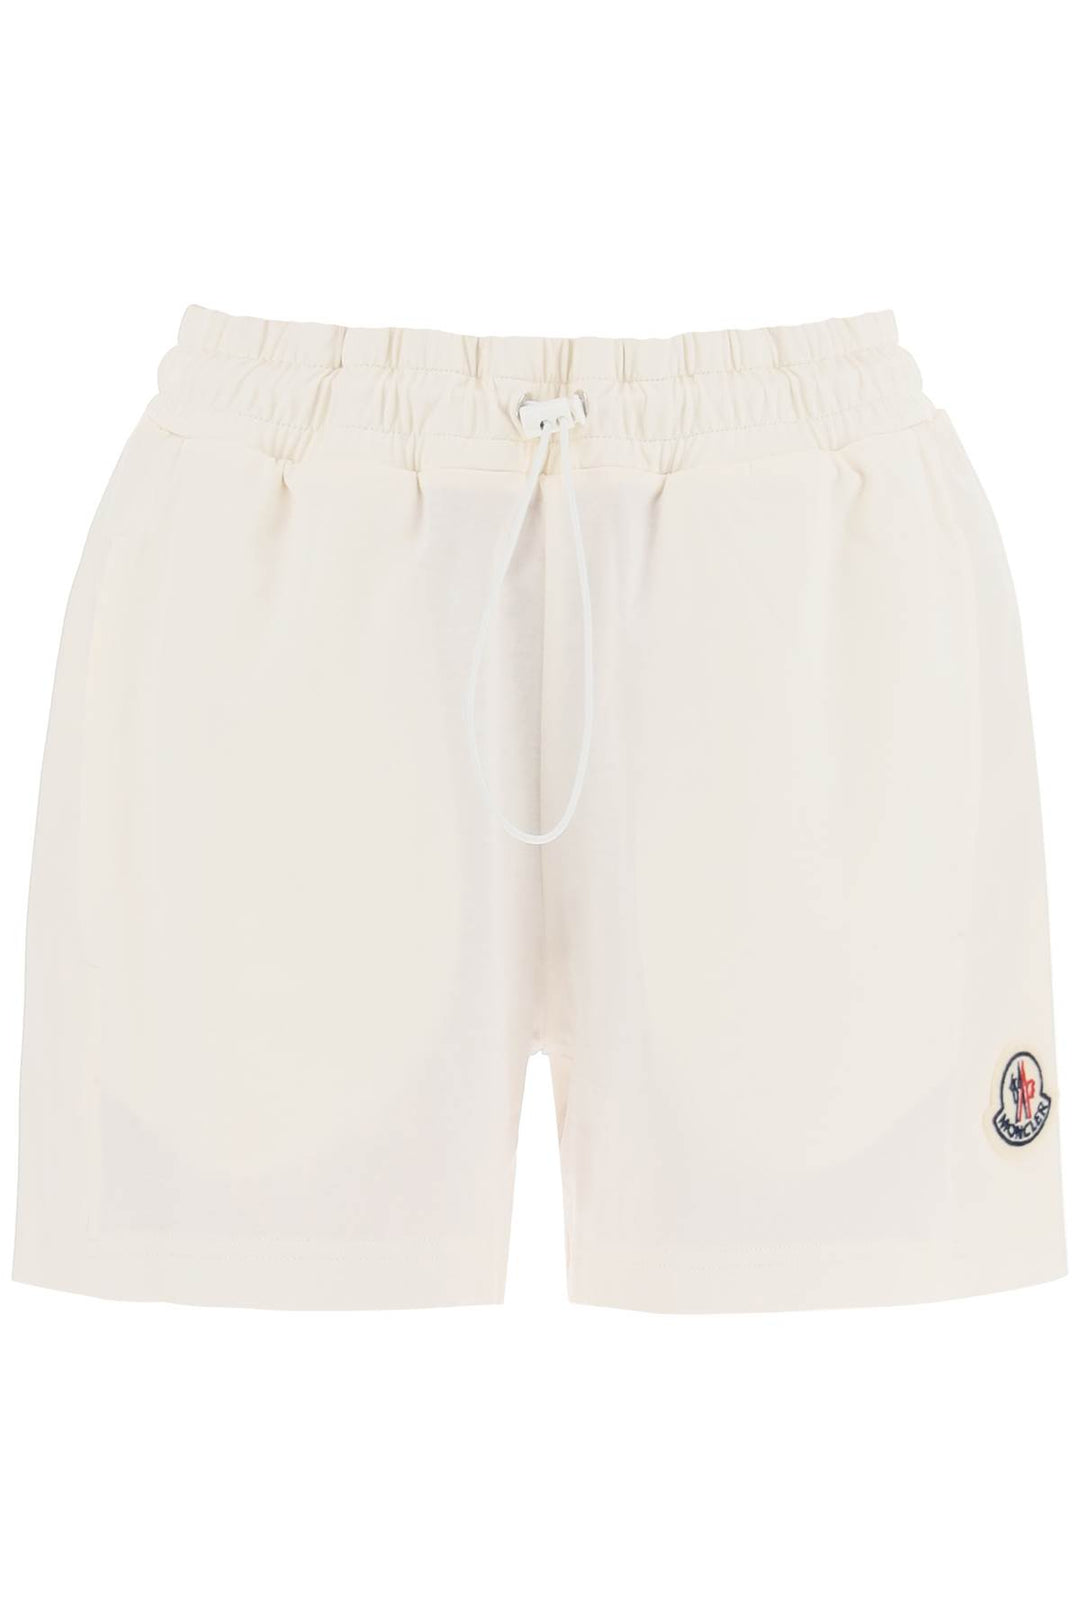 Moncler Sporty Shorts With Nylon Inserts   White